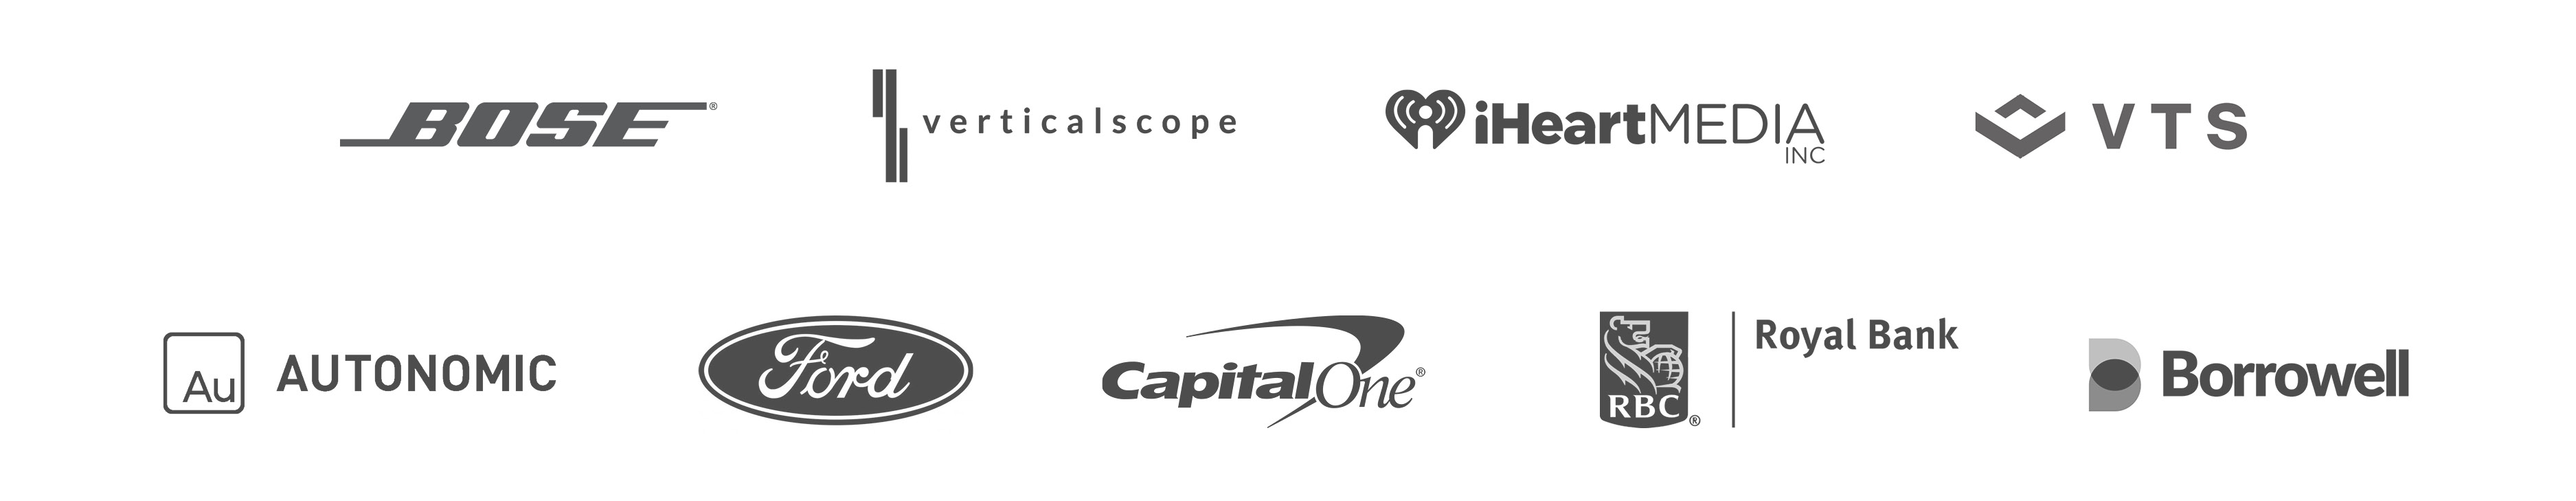 Logo portfolio: Bose, Verticalscope, iHeart Media Inc, VTS, Autonomic, Ford, Capital One, Royal Bank and Borrowell logos